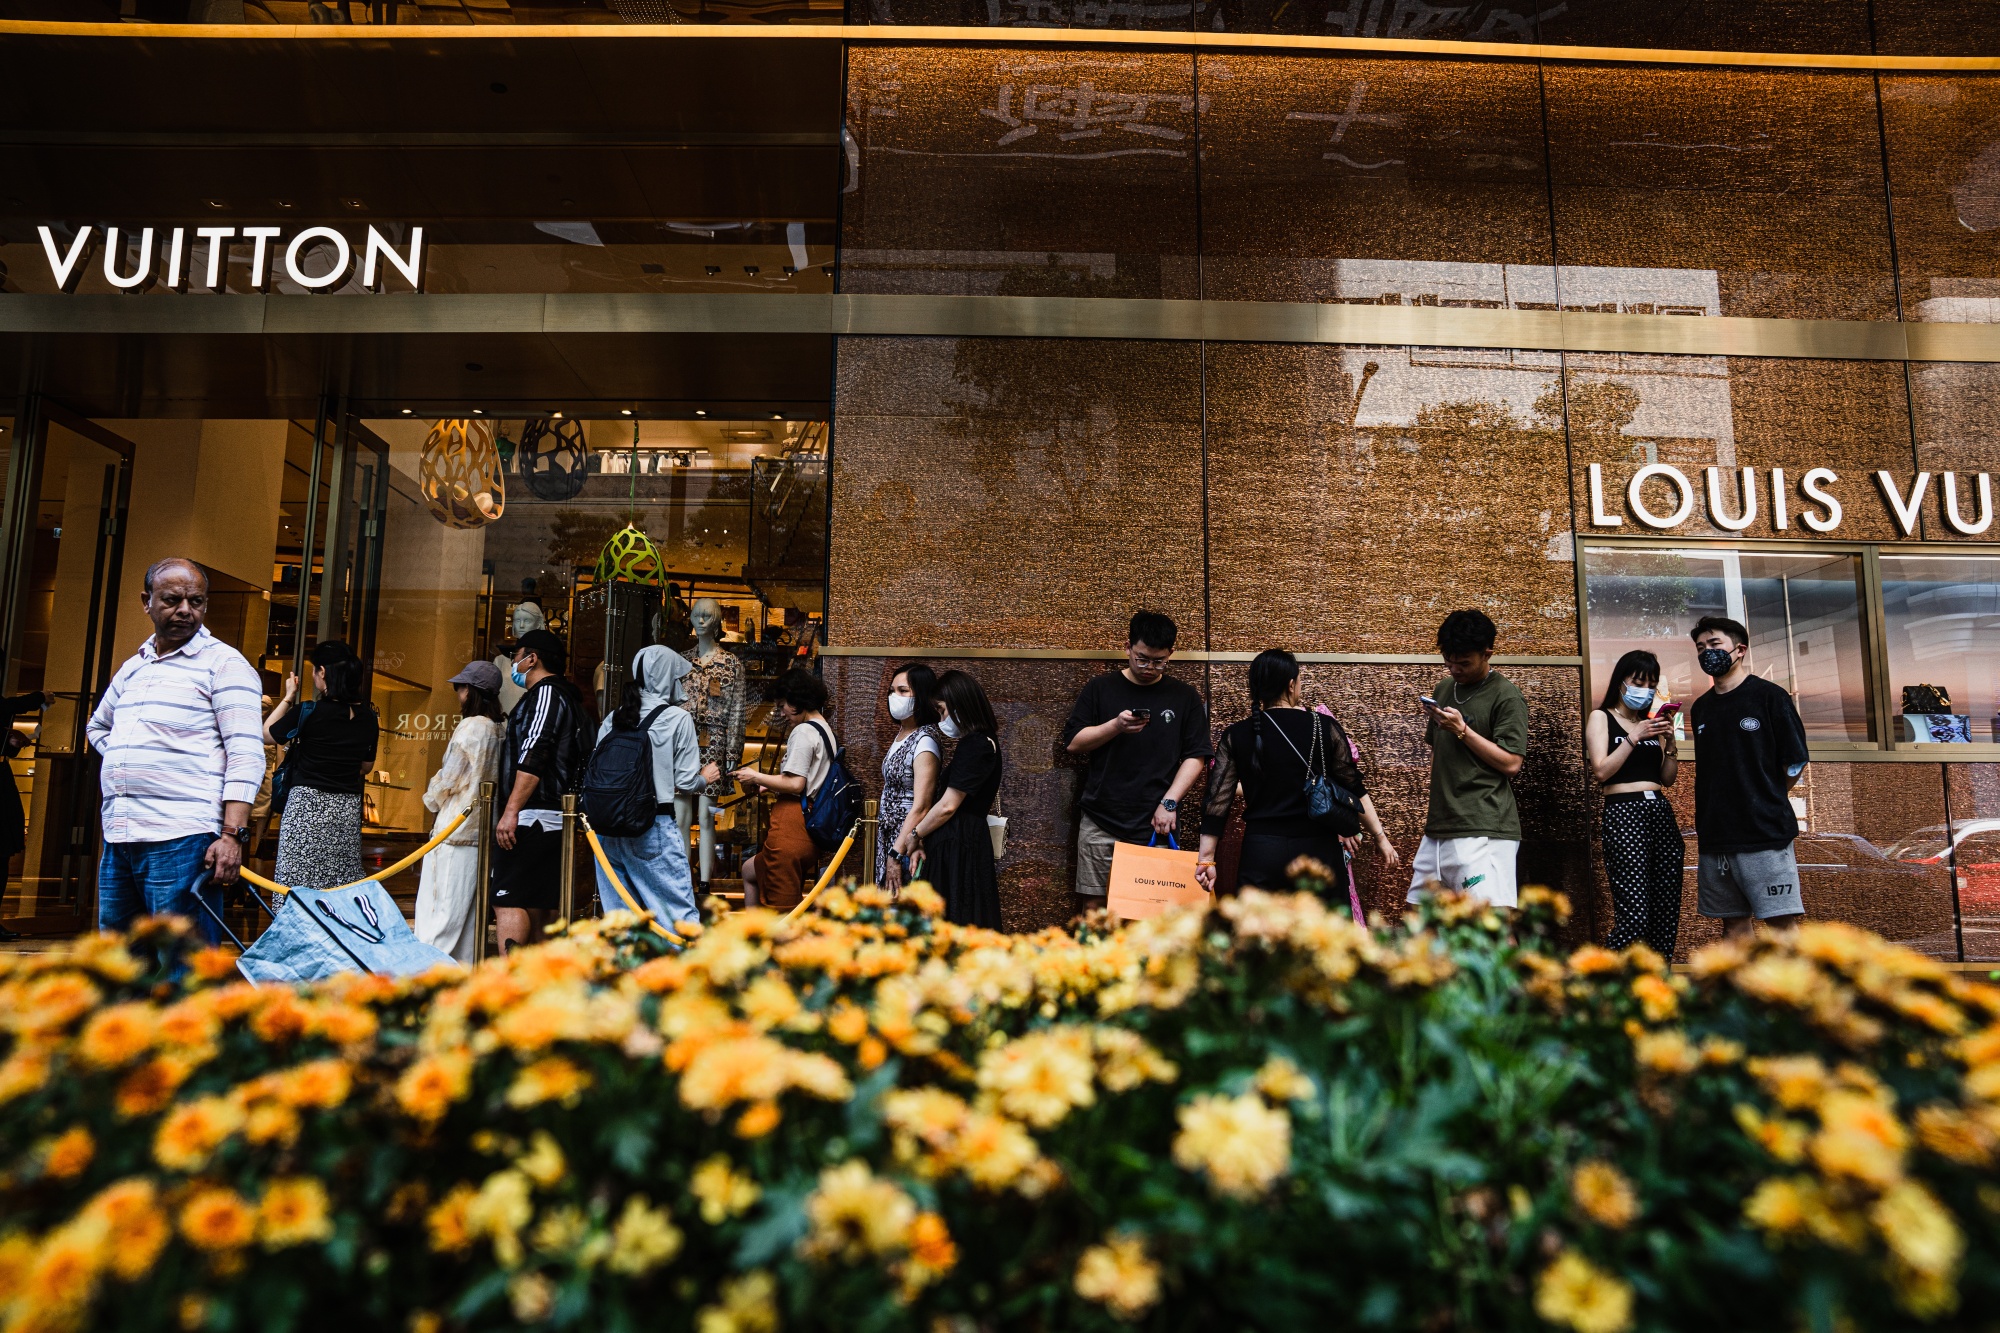 Louis Vuitton Hong Kong Harbour City